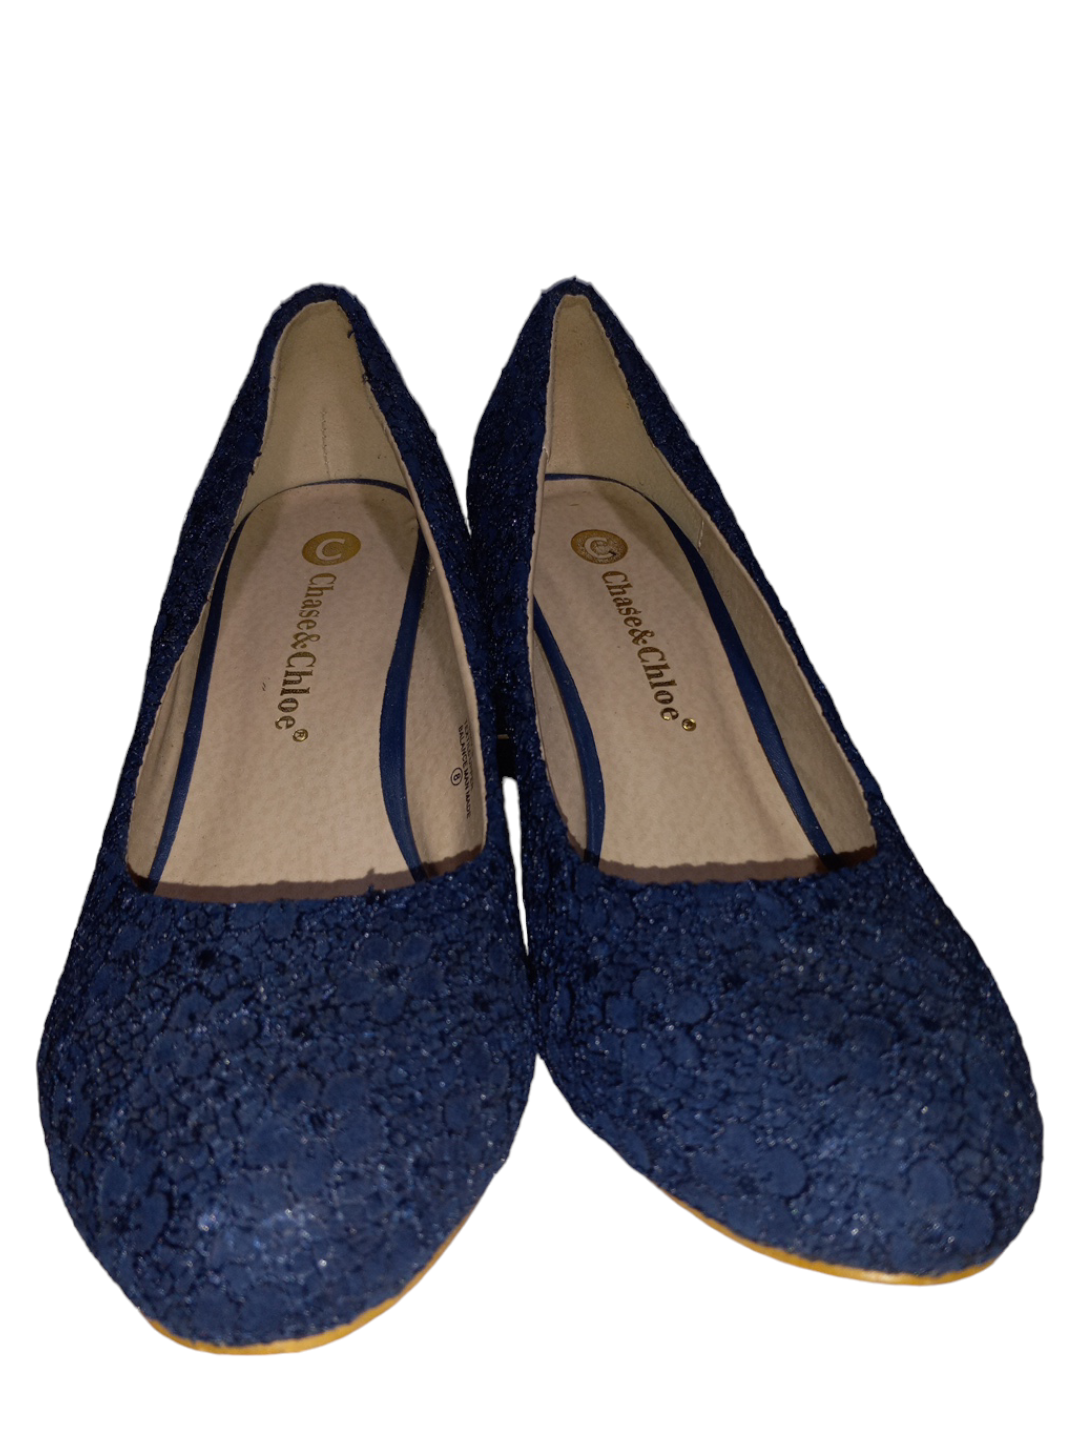 Blue Shoes Heels Stiletto Clothes Mentor, Size 8